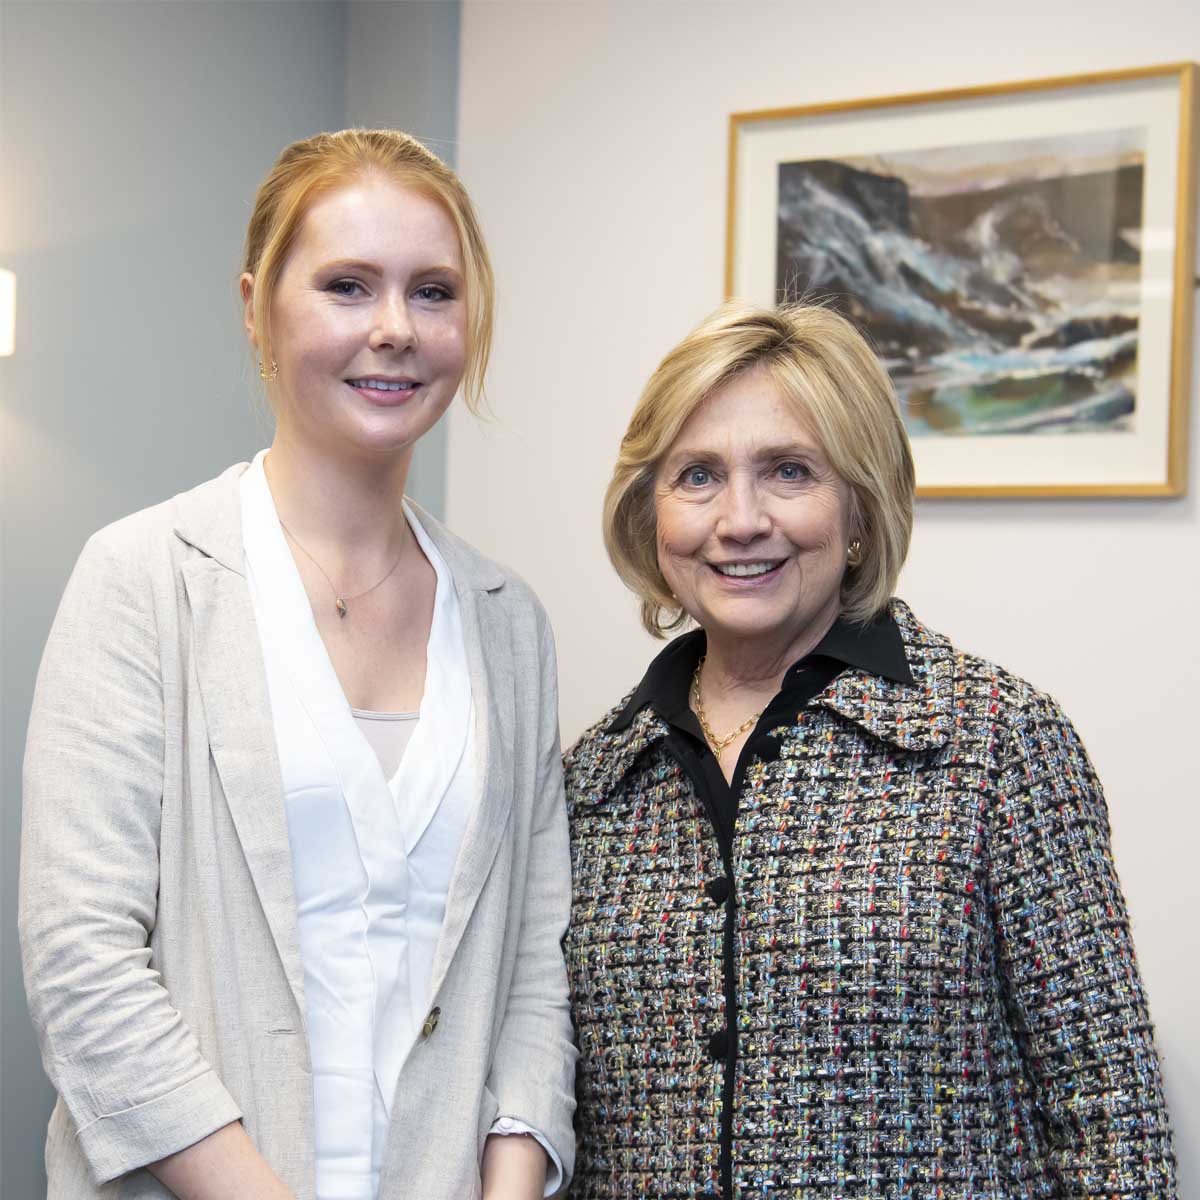 Angharad with Hillary Clinton